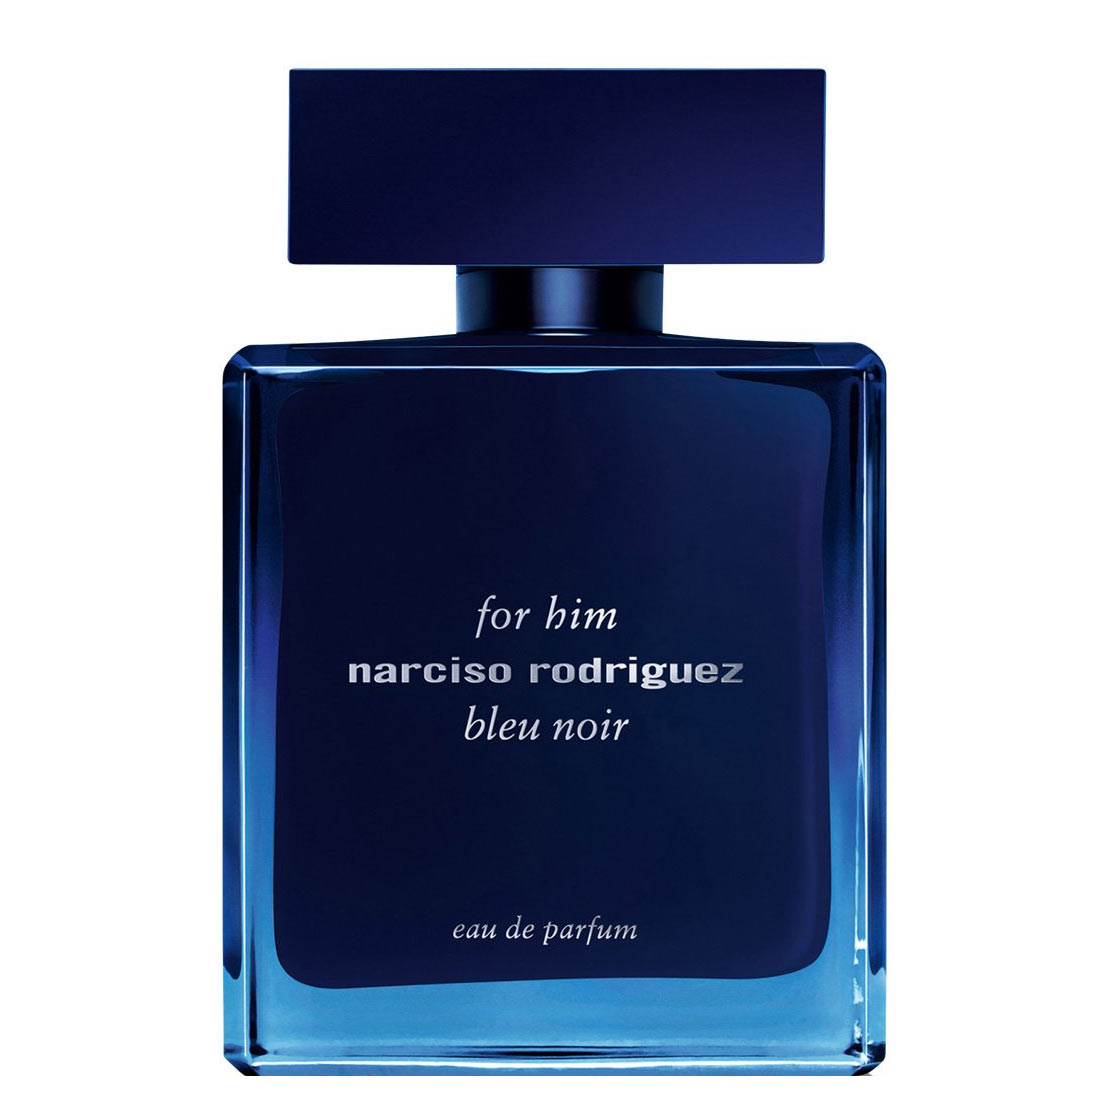 Narciso-Rodriguez-for-Him-Bleu-Noir-Eau-de-Parfum-Narciso-Rodriguez